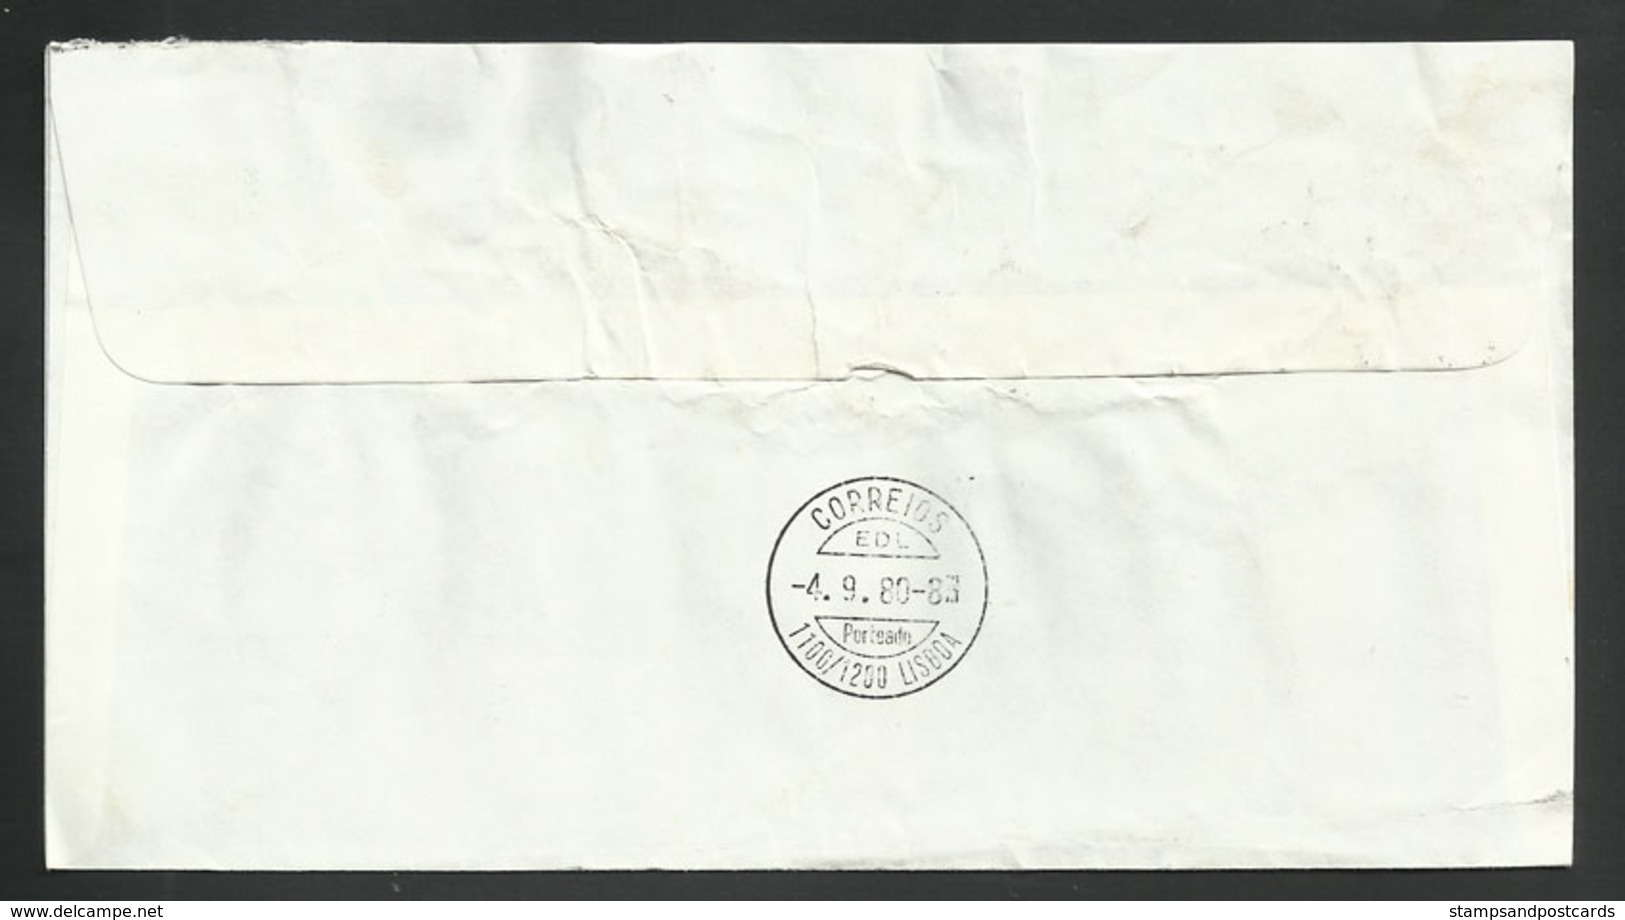 Portugal Lettre 1980 Timbre-taxe Port Dû Postage Due Cover - Briefe U. Dokumente